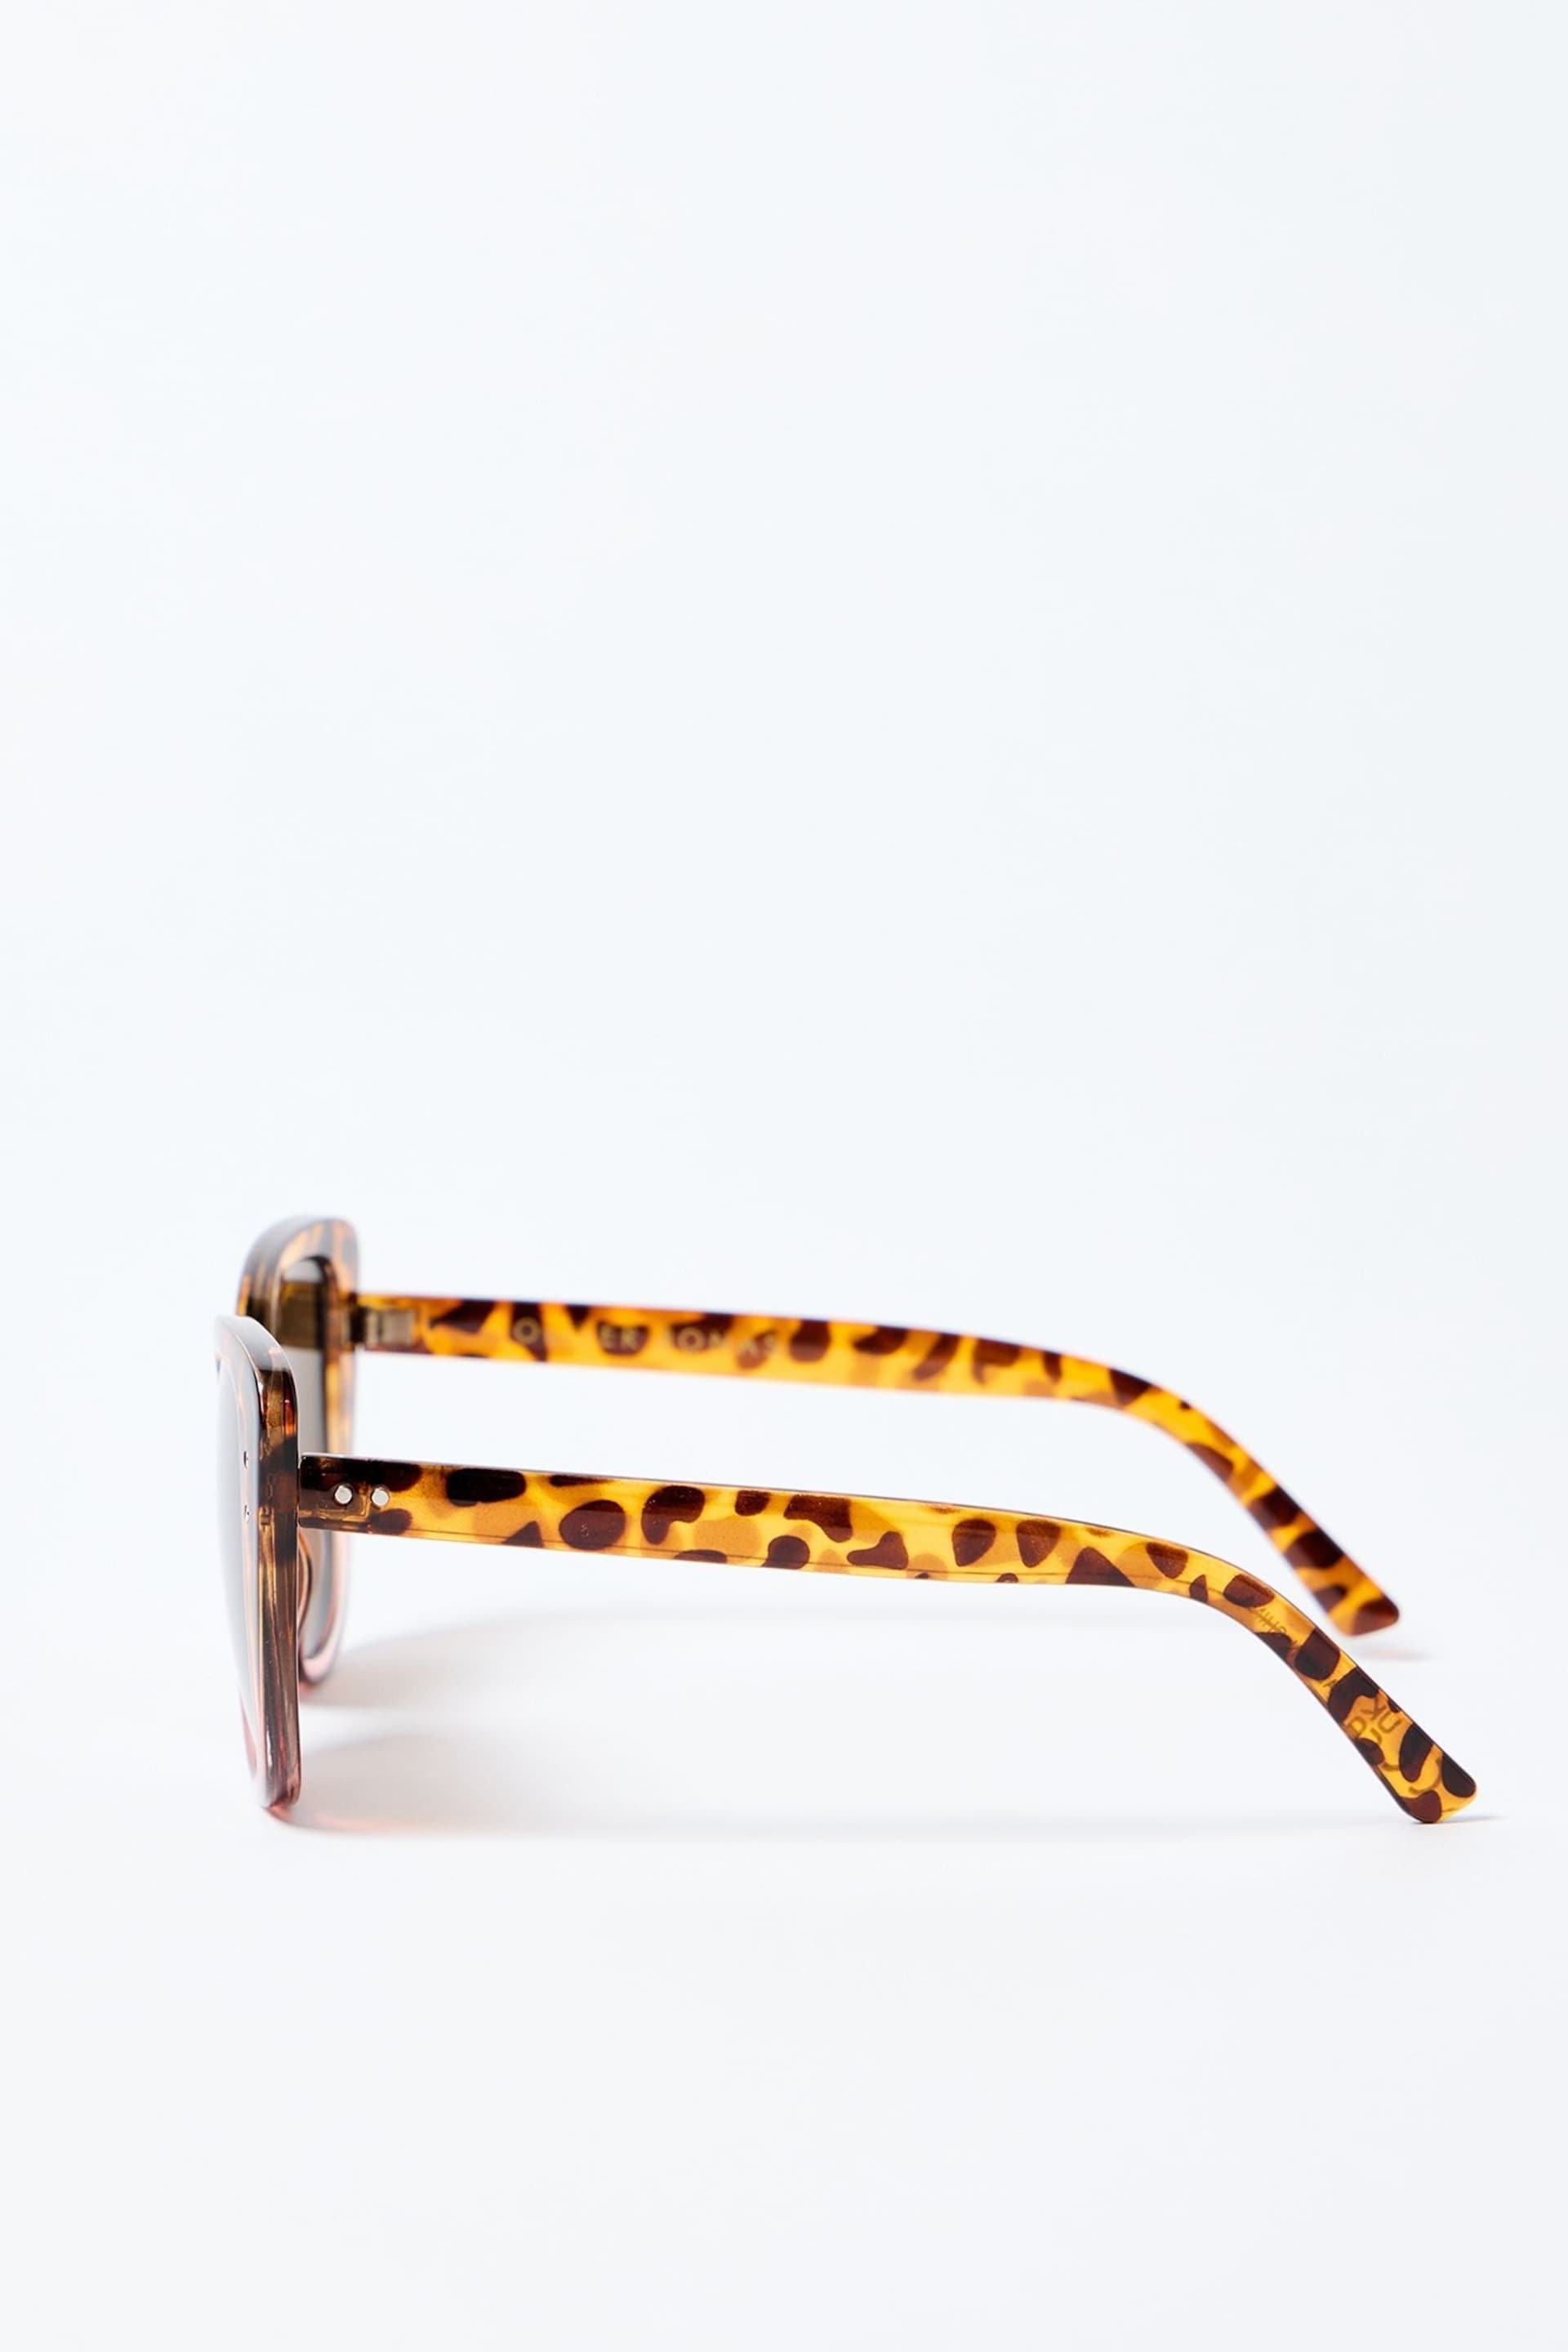 Oliver Bonas Pink Ombre Faux Fur Tortoiseshell Cat Eye Sunglasses - Image 3 of 7